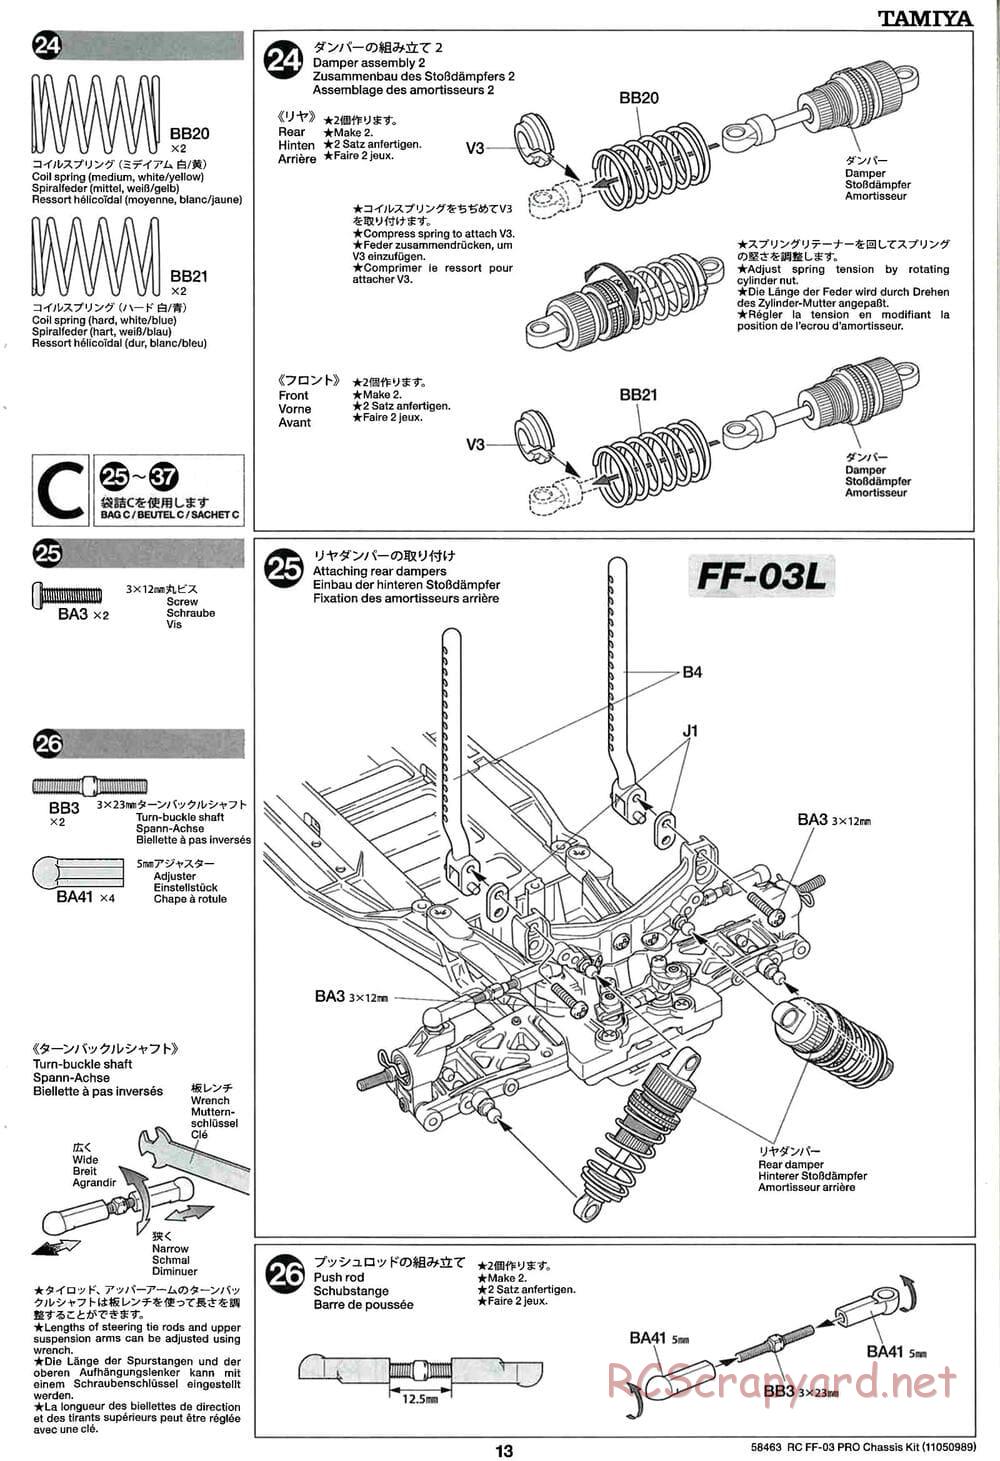 Tamiya - FF-03 Pro Chassis - Manual - Page 13